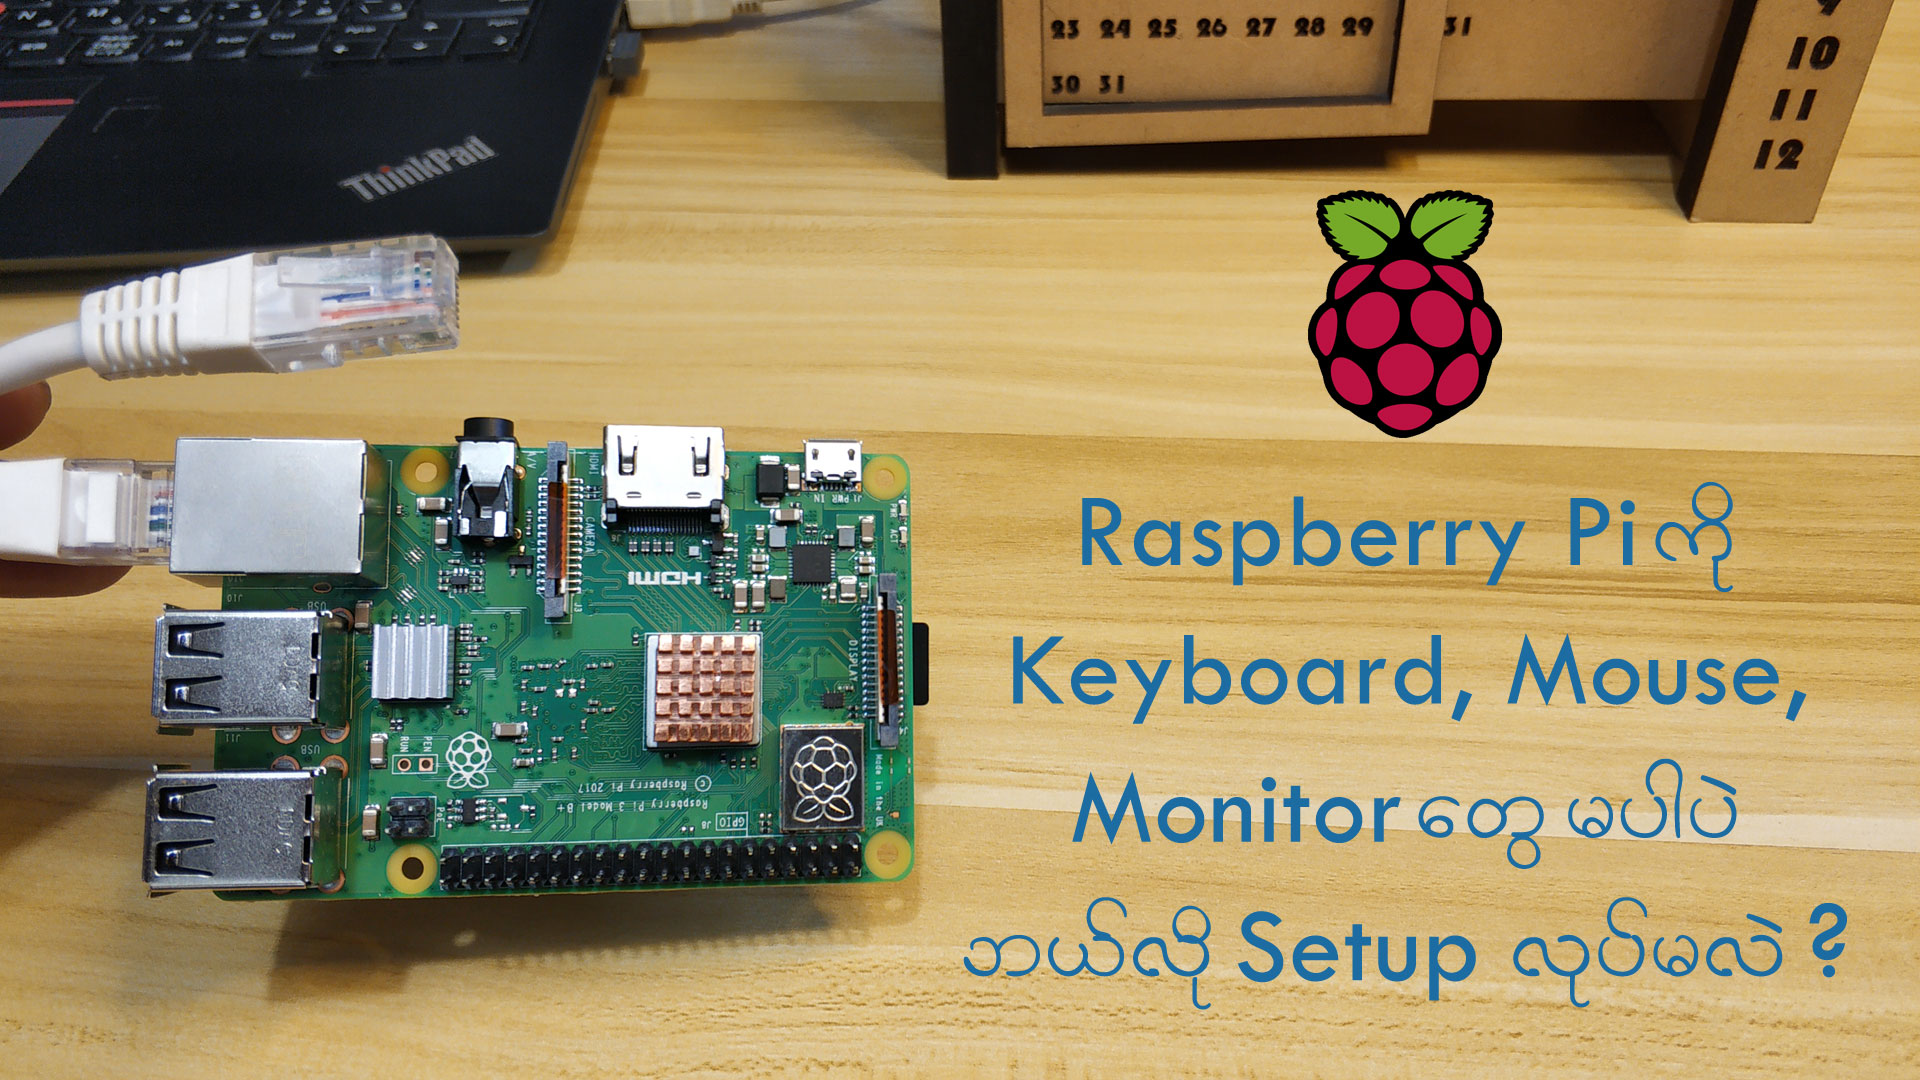 Raspberry Pi ကို Monitor မပါပဲ ဘယ်လို Setup လုပ်မလဲ?